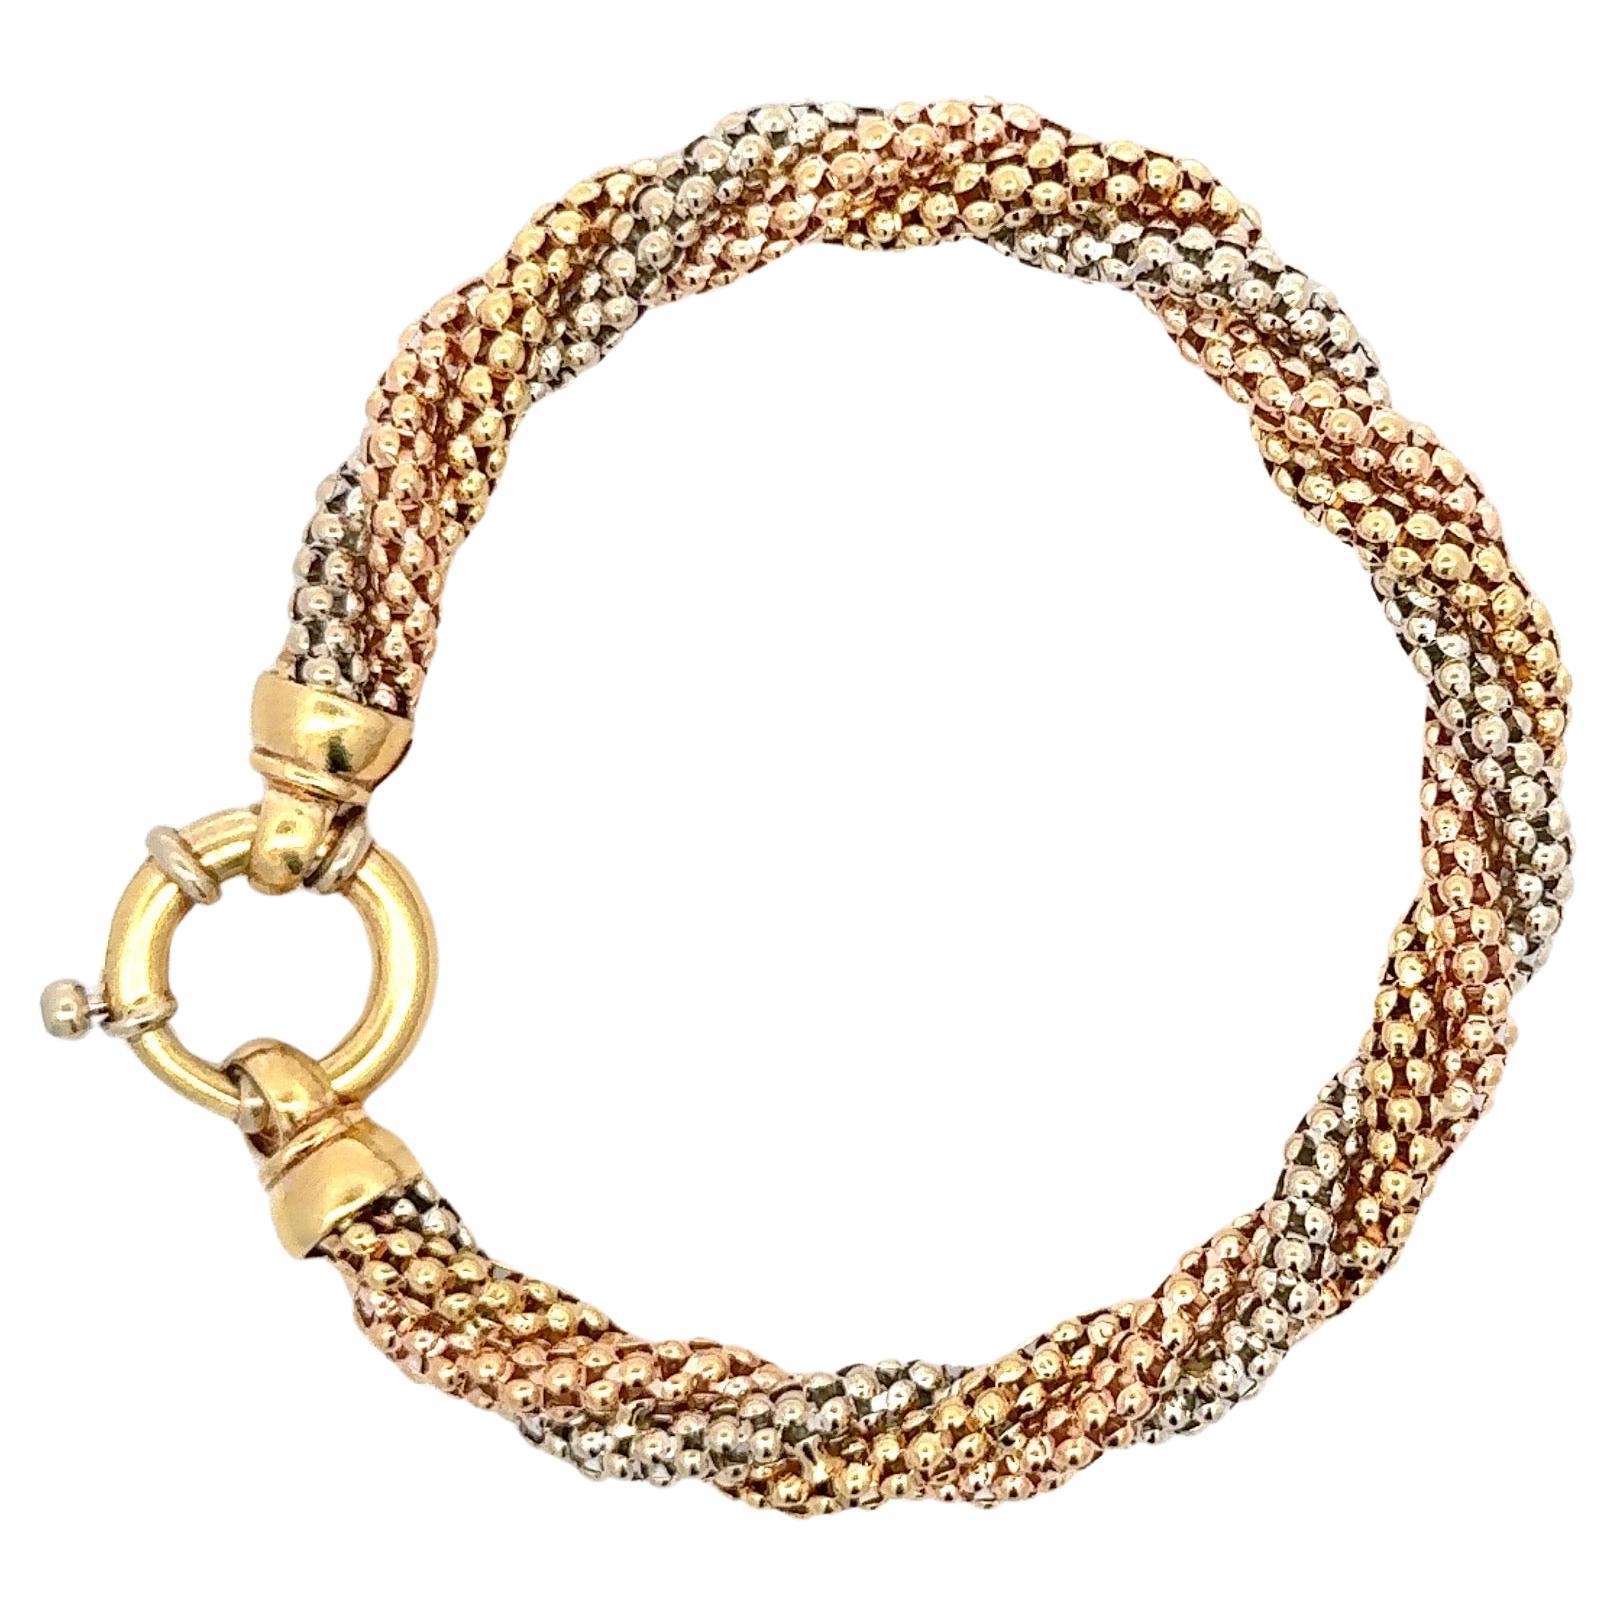 18 Karat gold bracelet featuring rose, white & yellow gold in a twist beaded motif weighing 23 grams.

